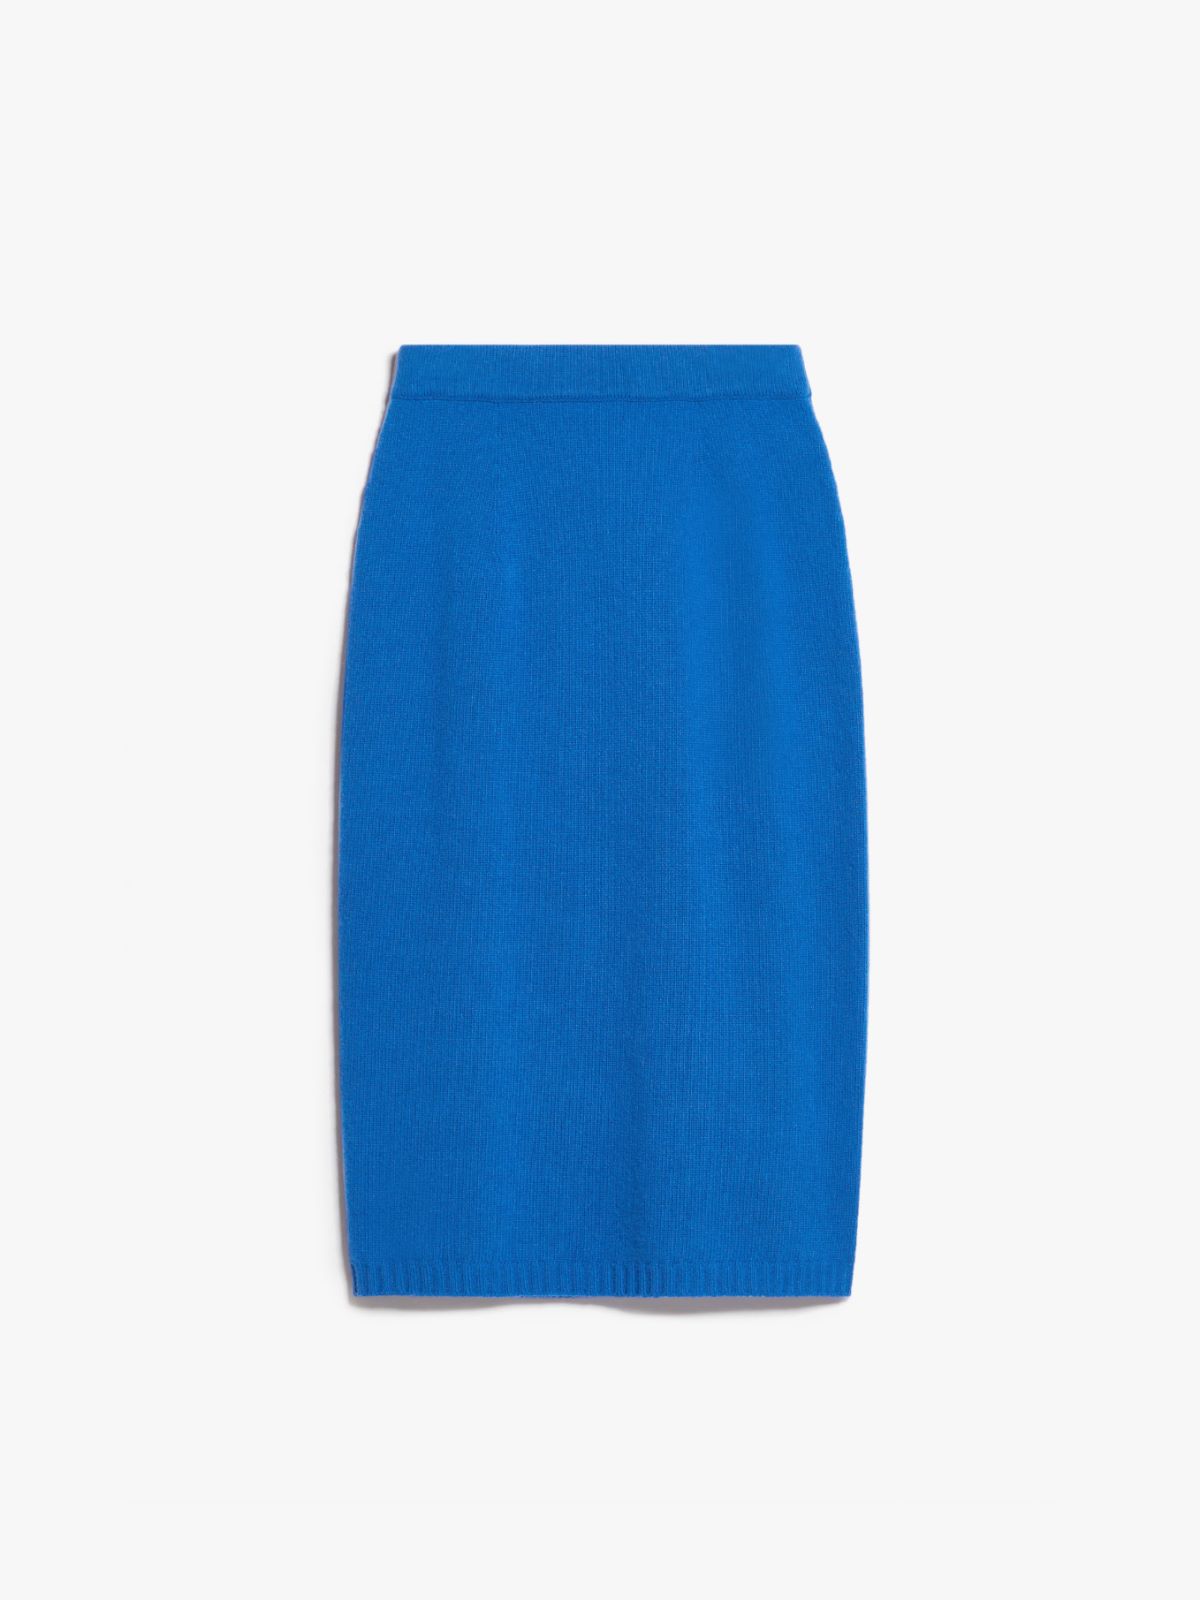 Wool yarn skirt - CORNFLOWER BLUE - Weekend Max Mara - 5